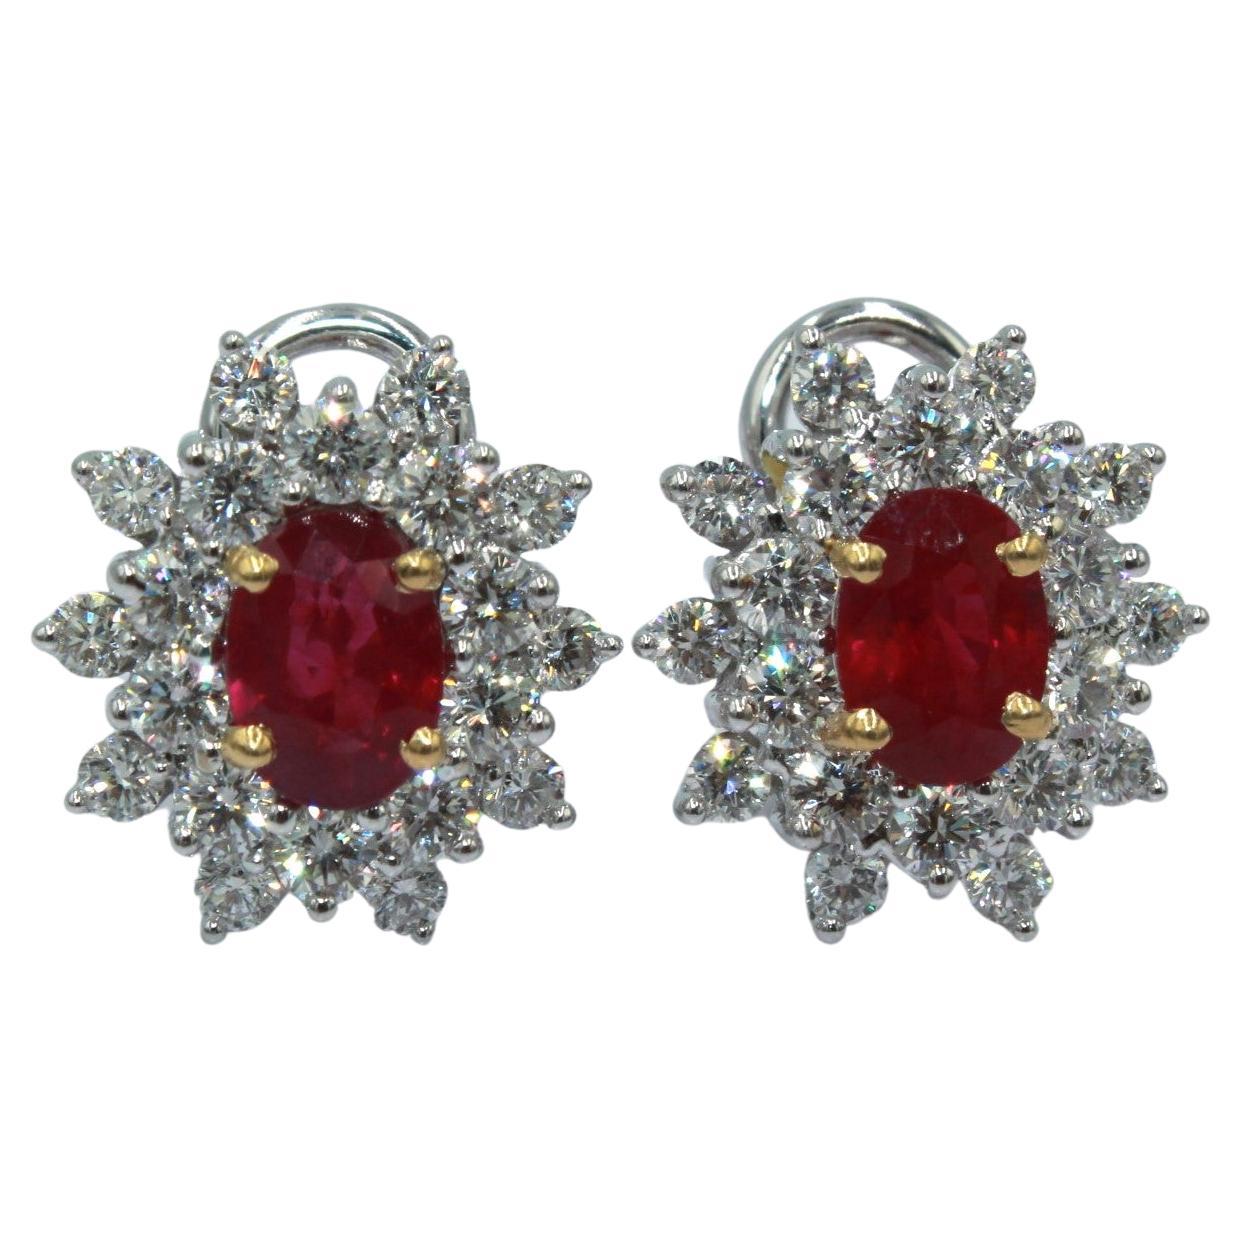 2.11 Carat Burma Ruby & Diamond Earring 